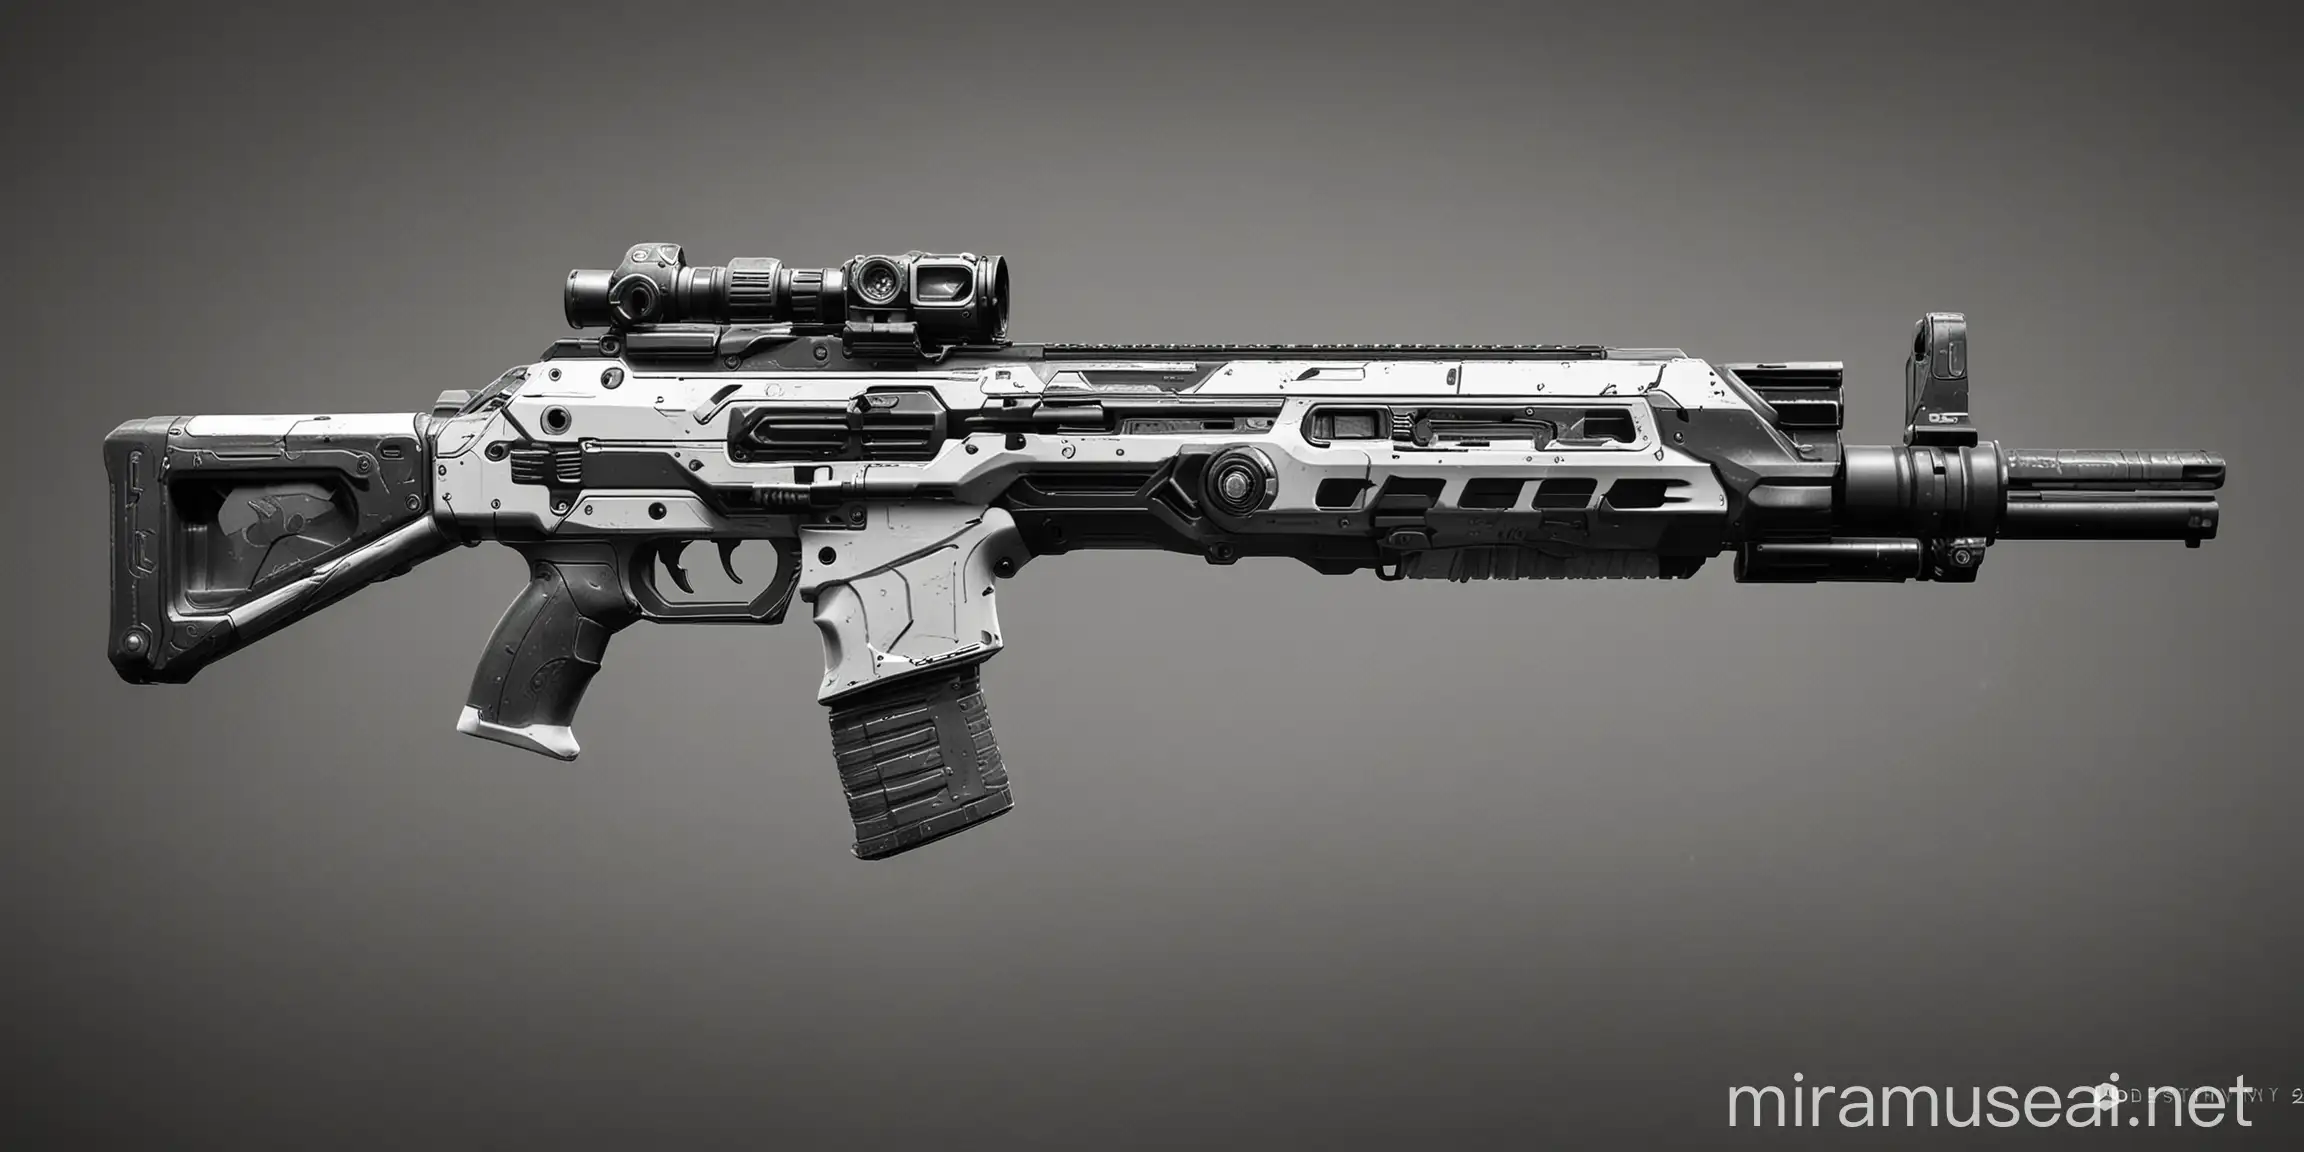 Futuristic Black and White Destiny 2 Assault Rifle